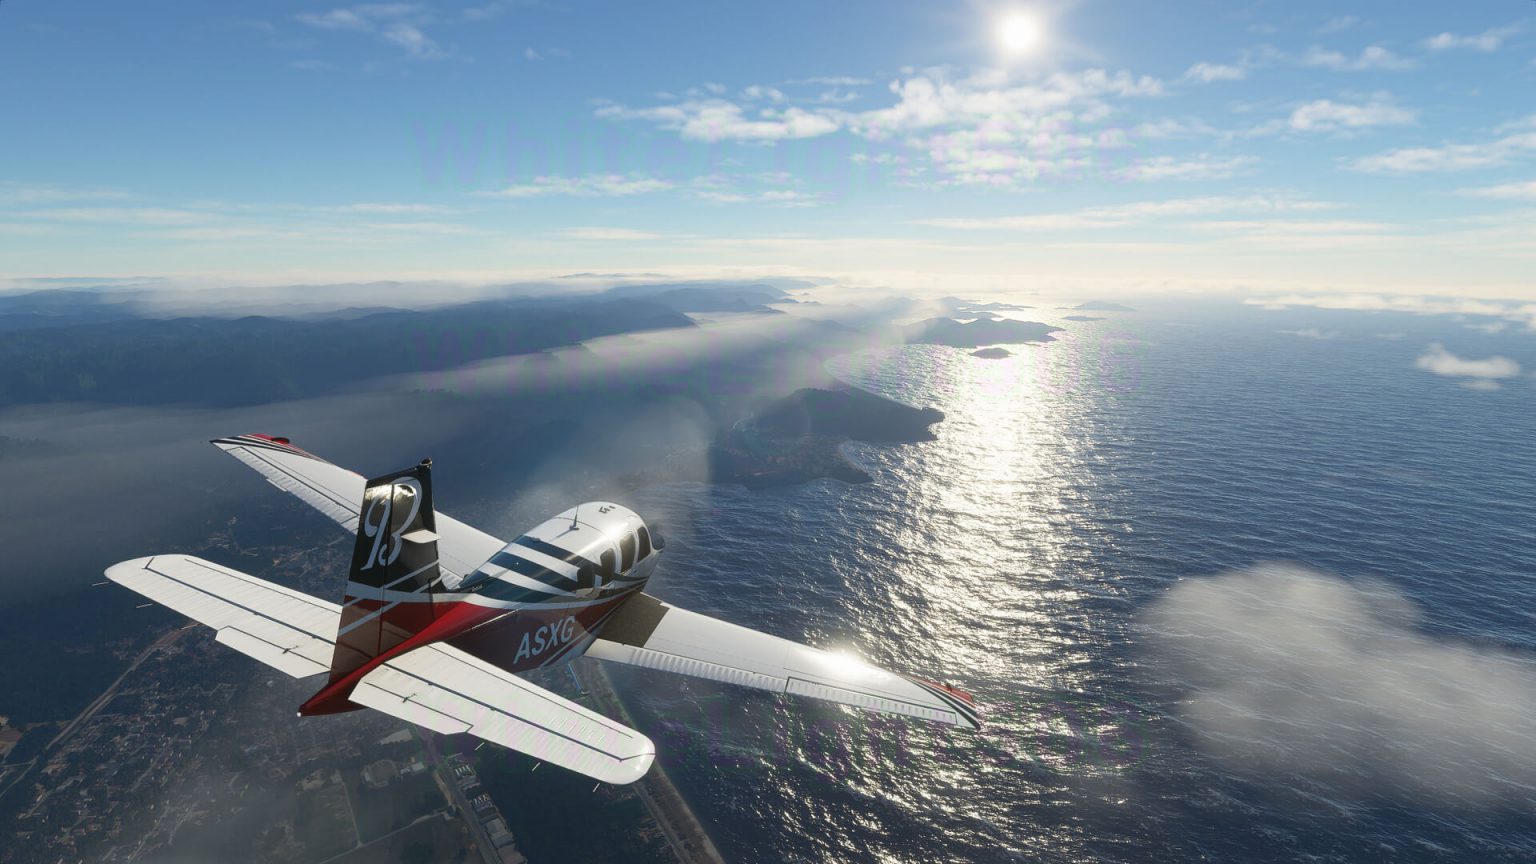 Microsoft Flight Simulator captura 6 avion y el mar